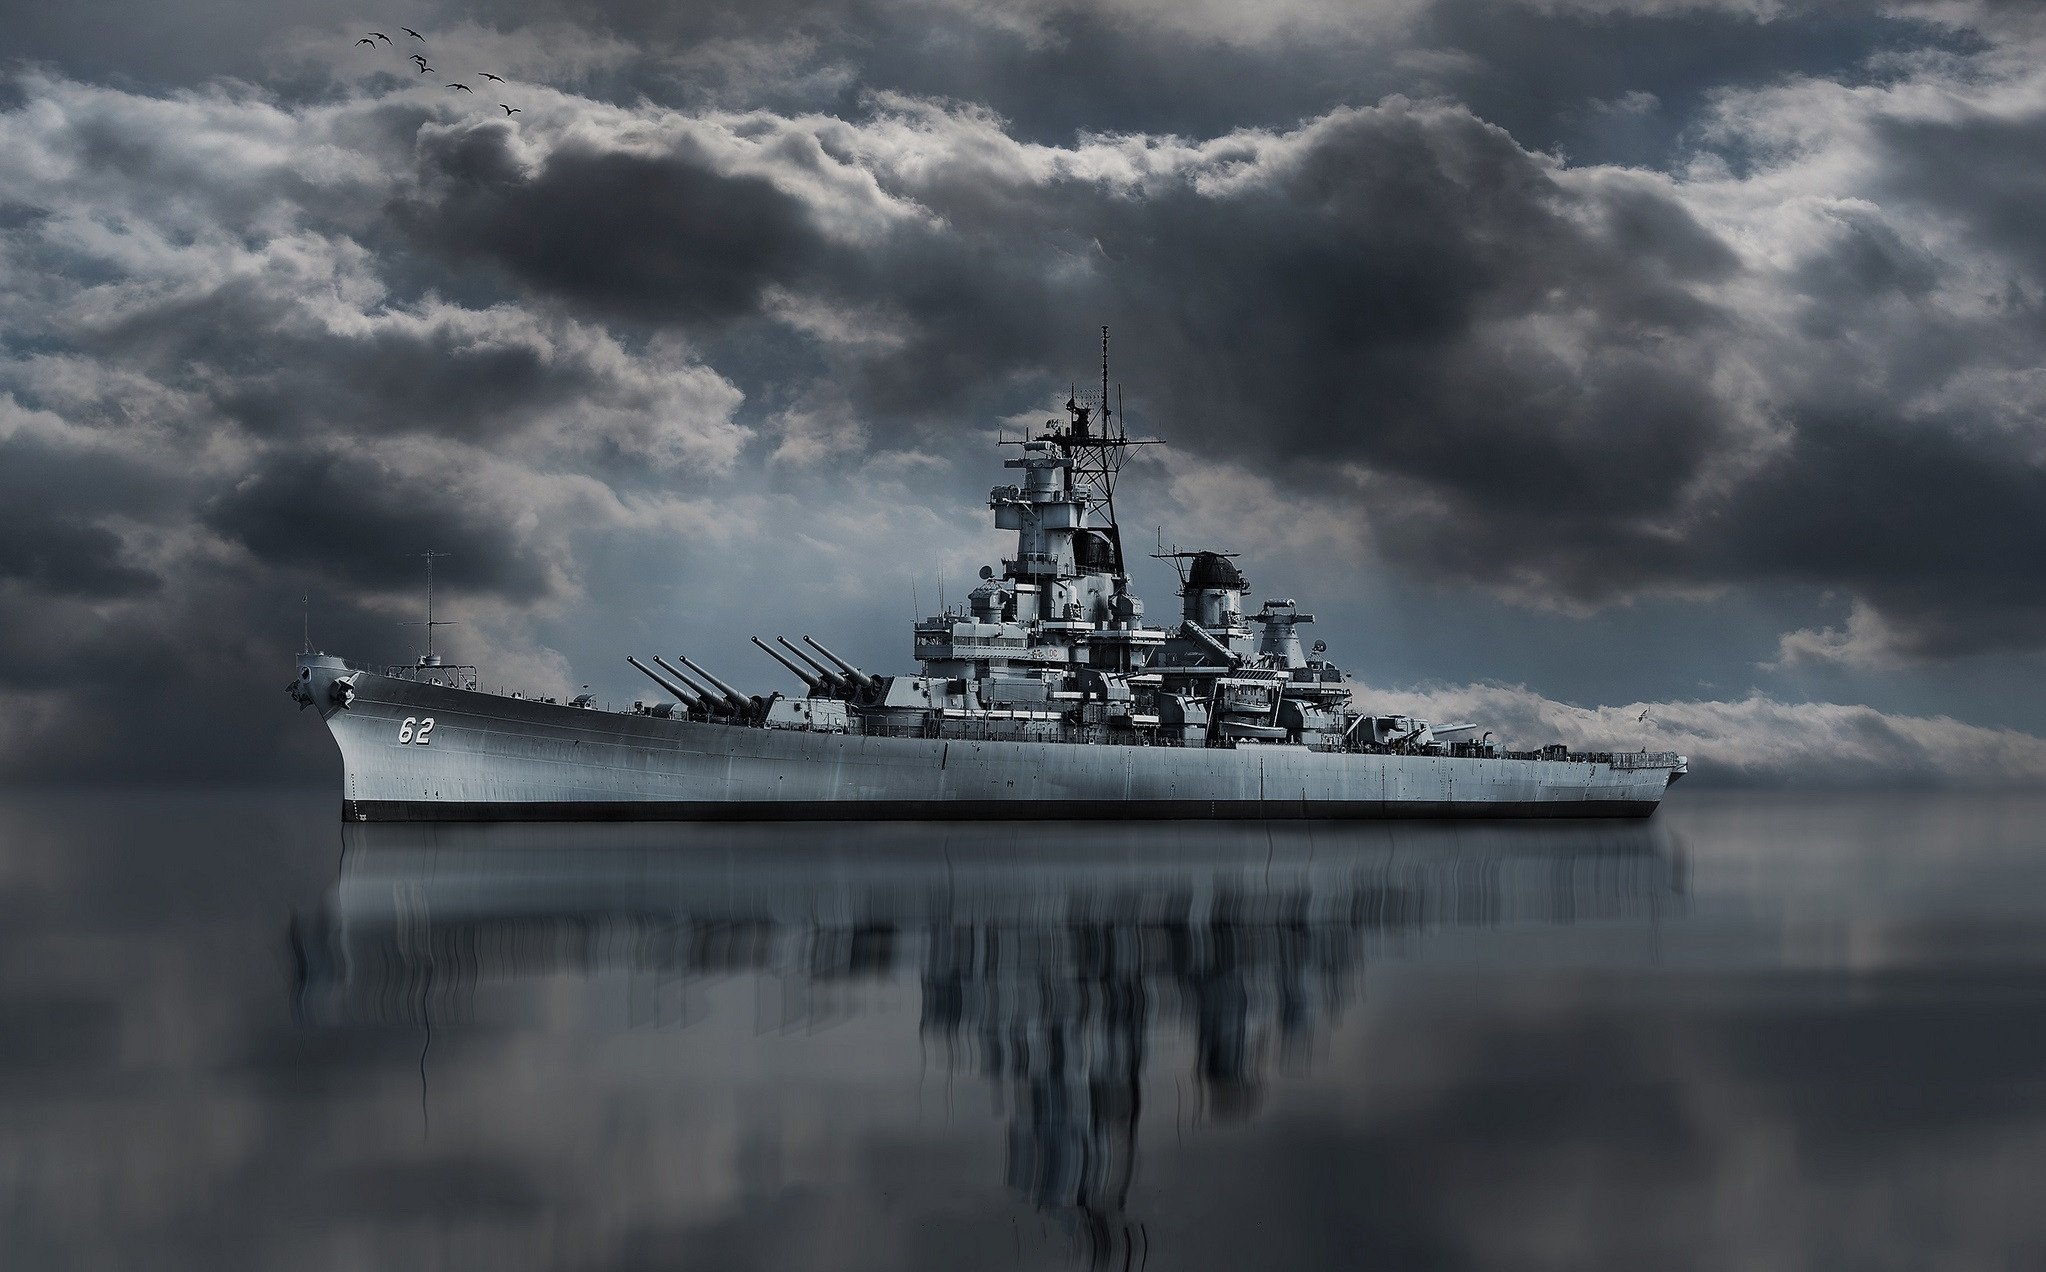 Battleship HD Wallpaper and Background